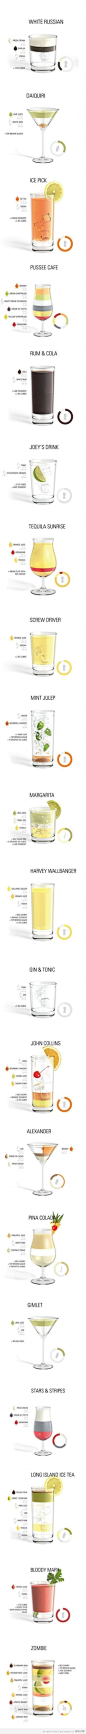 mixed drink infographic...不止要好喝，更要好调。环形比例更直观。